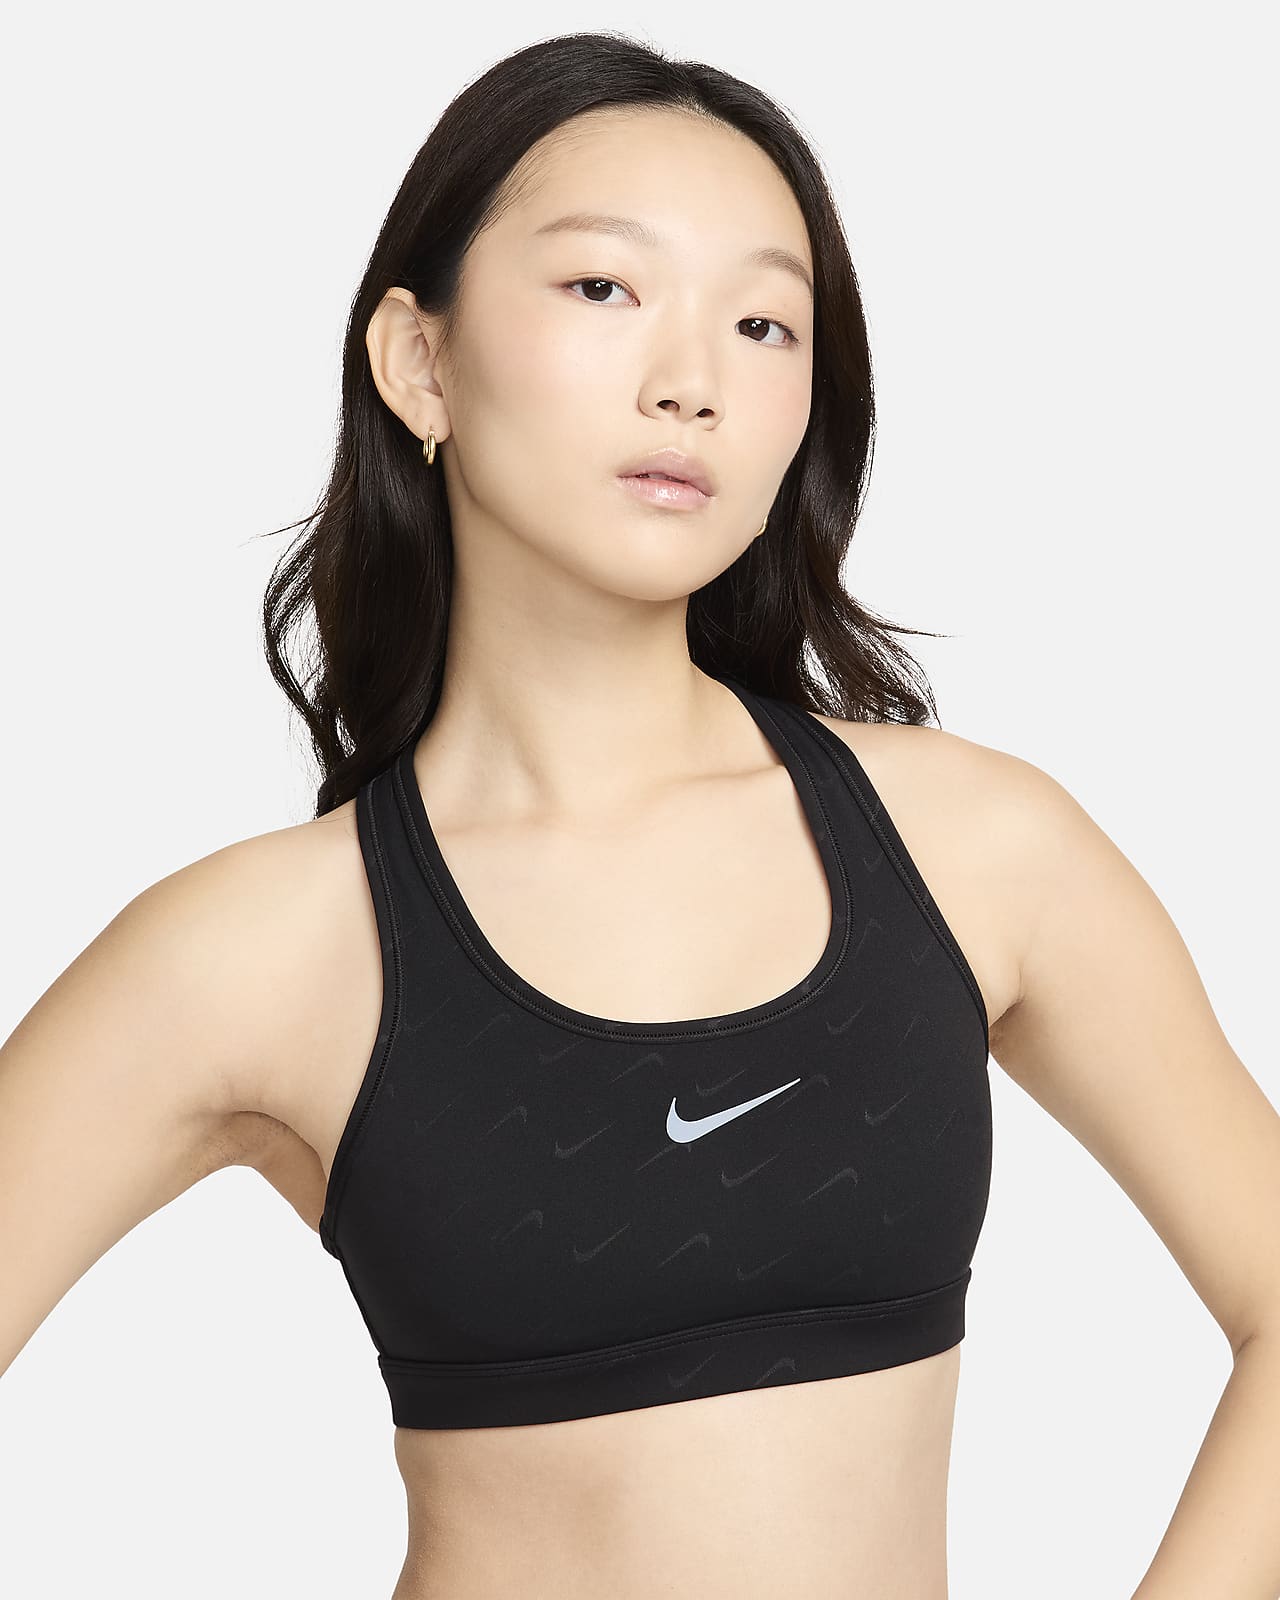 Nike Swoosh Women's Sports Bra - Orange Trance/White